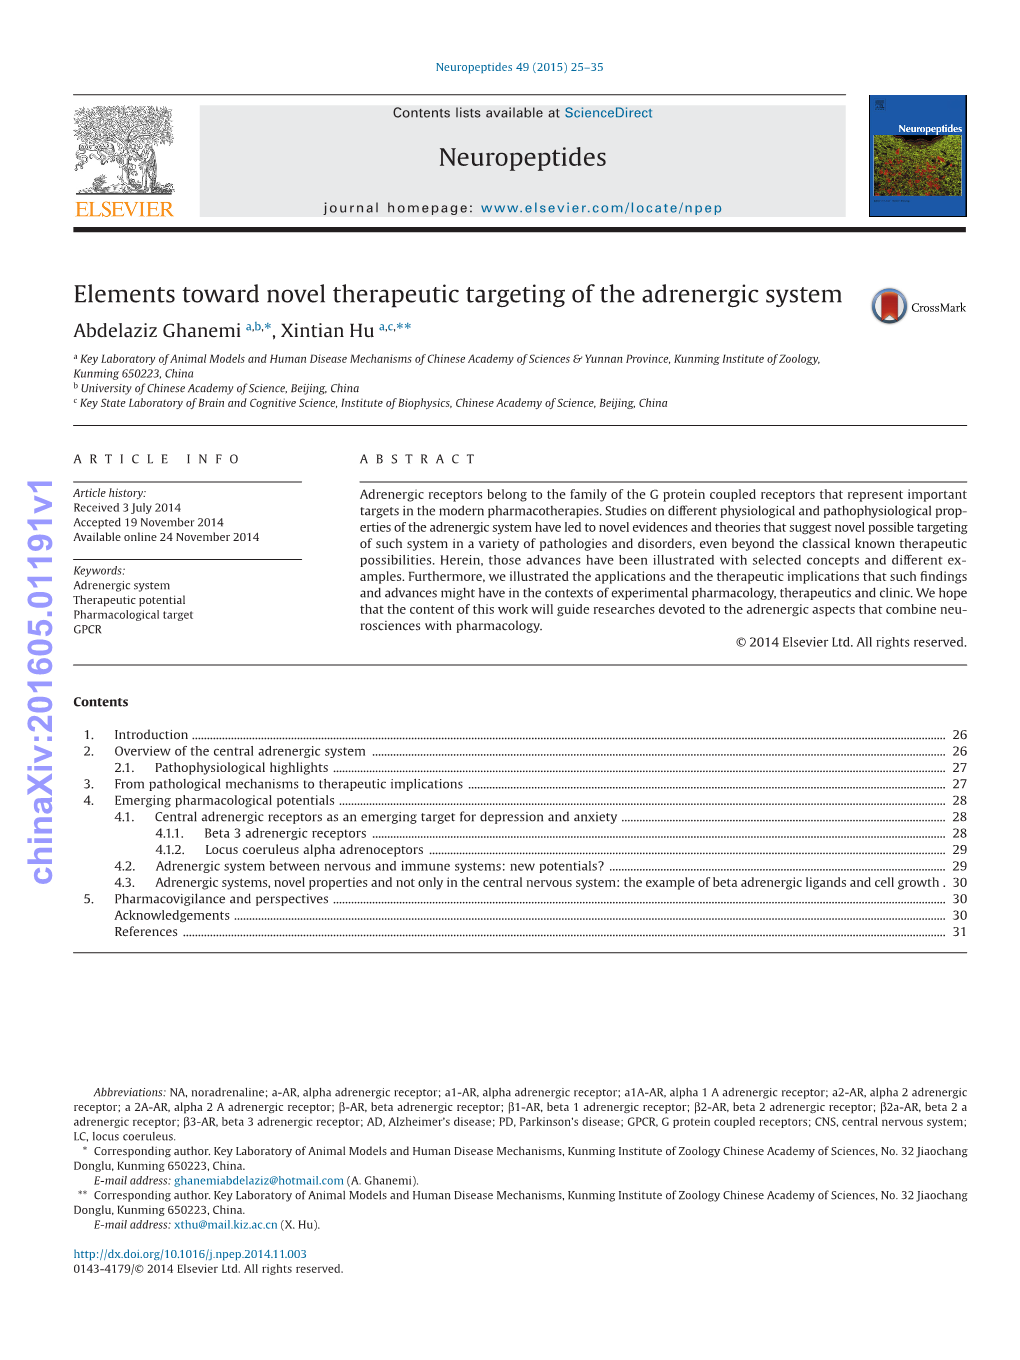 Elements Toward Novel Therapeutic Targeting of the Adrenergic System Abdelaziz Ghanemi A,B,*, Xintian Hu A,C,**